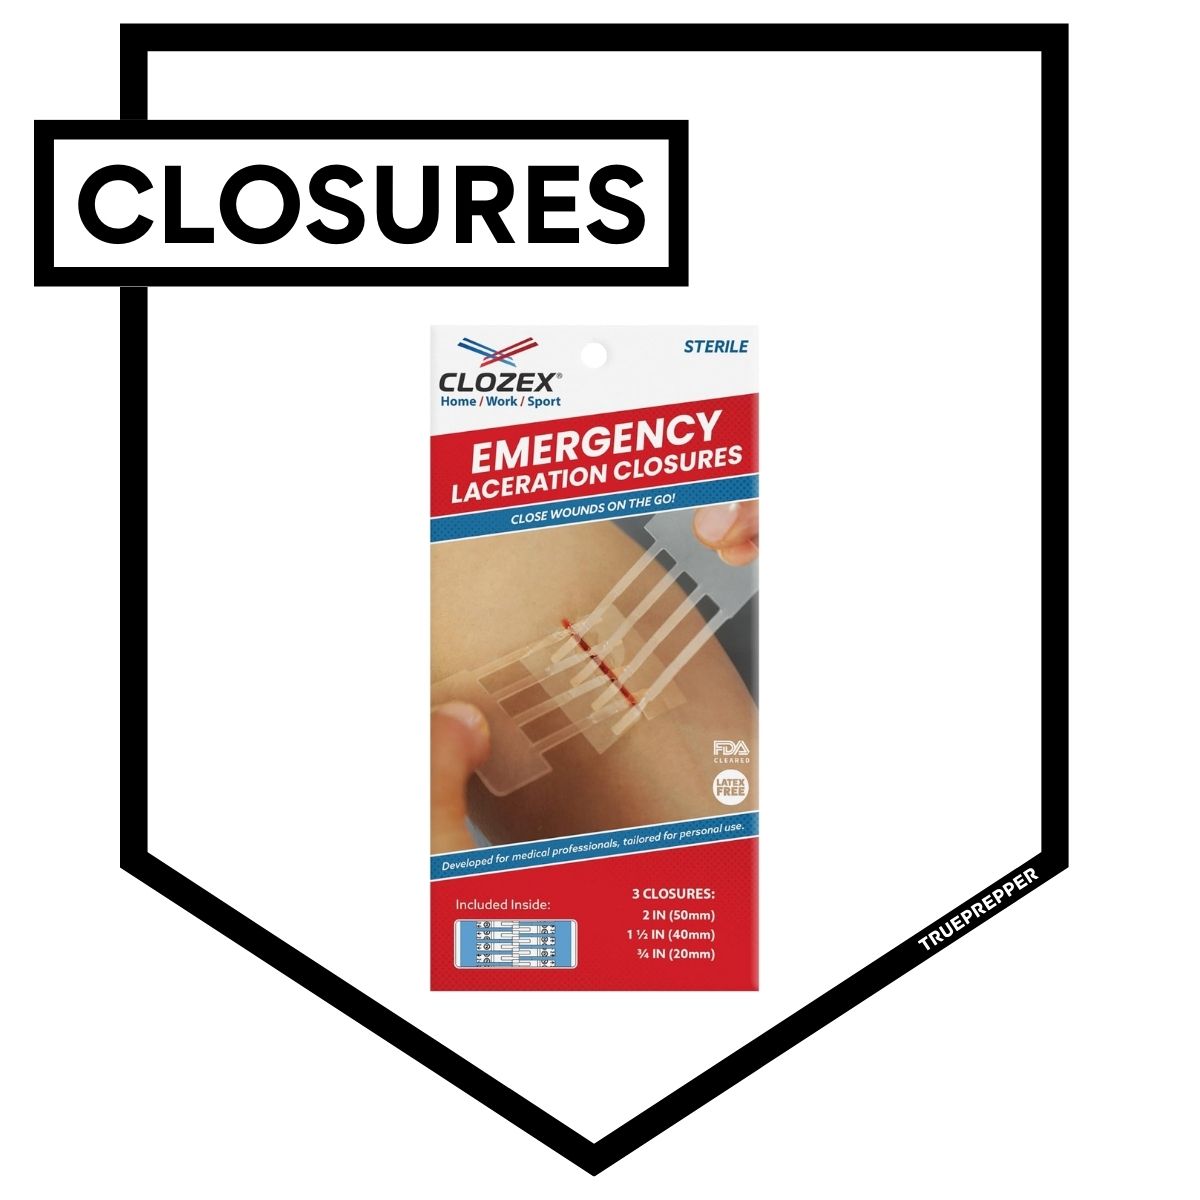 Clozex Emergency Laceration Closures